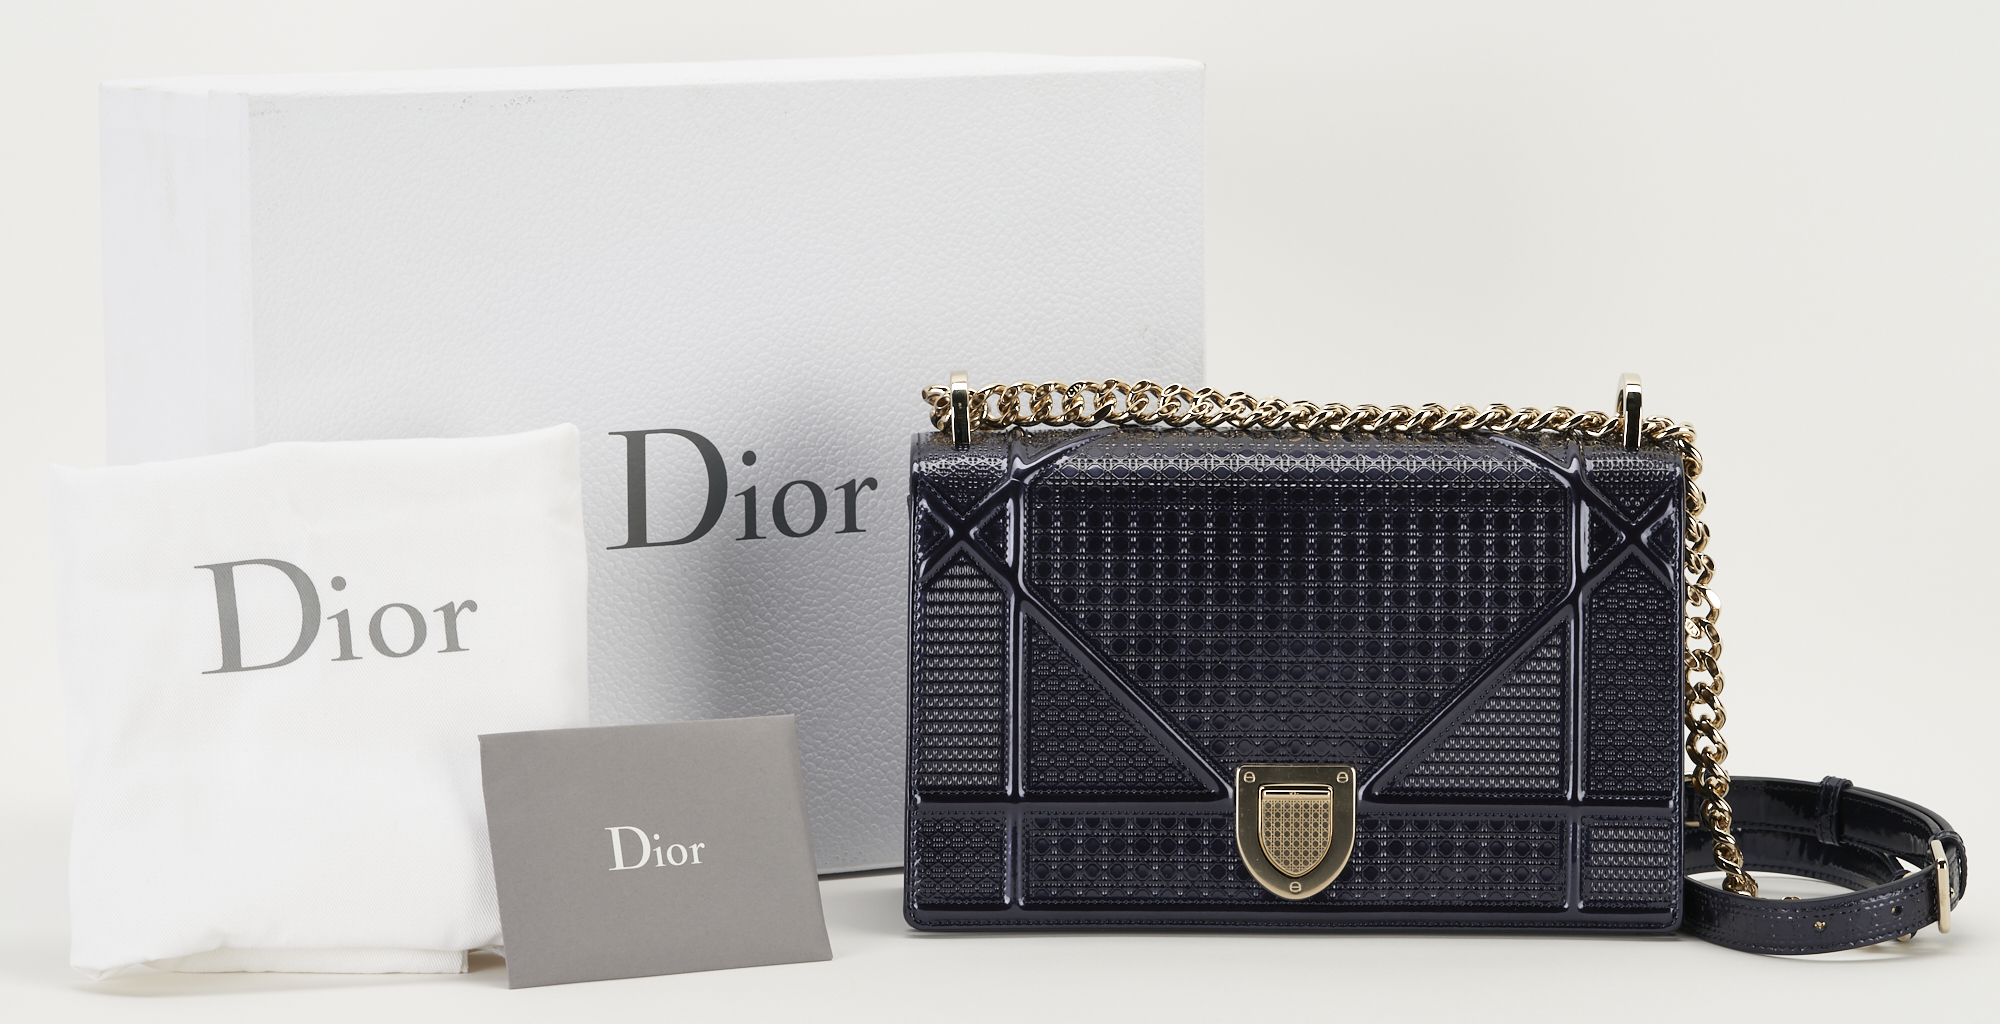 Sold at Auction: Christian Dior, CHRISTIAN DIOR DIORAMA METALLIC